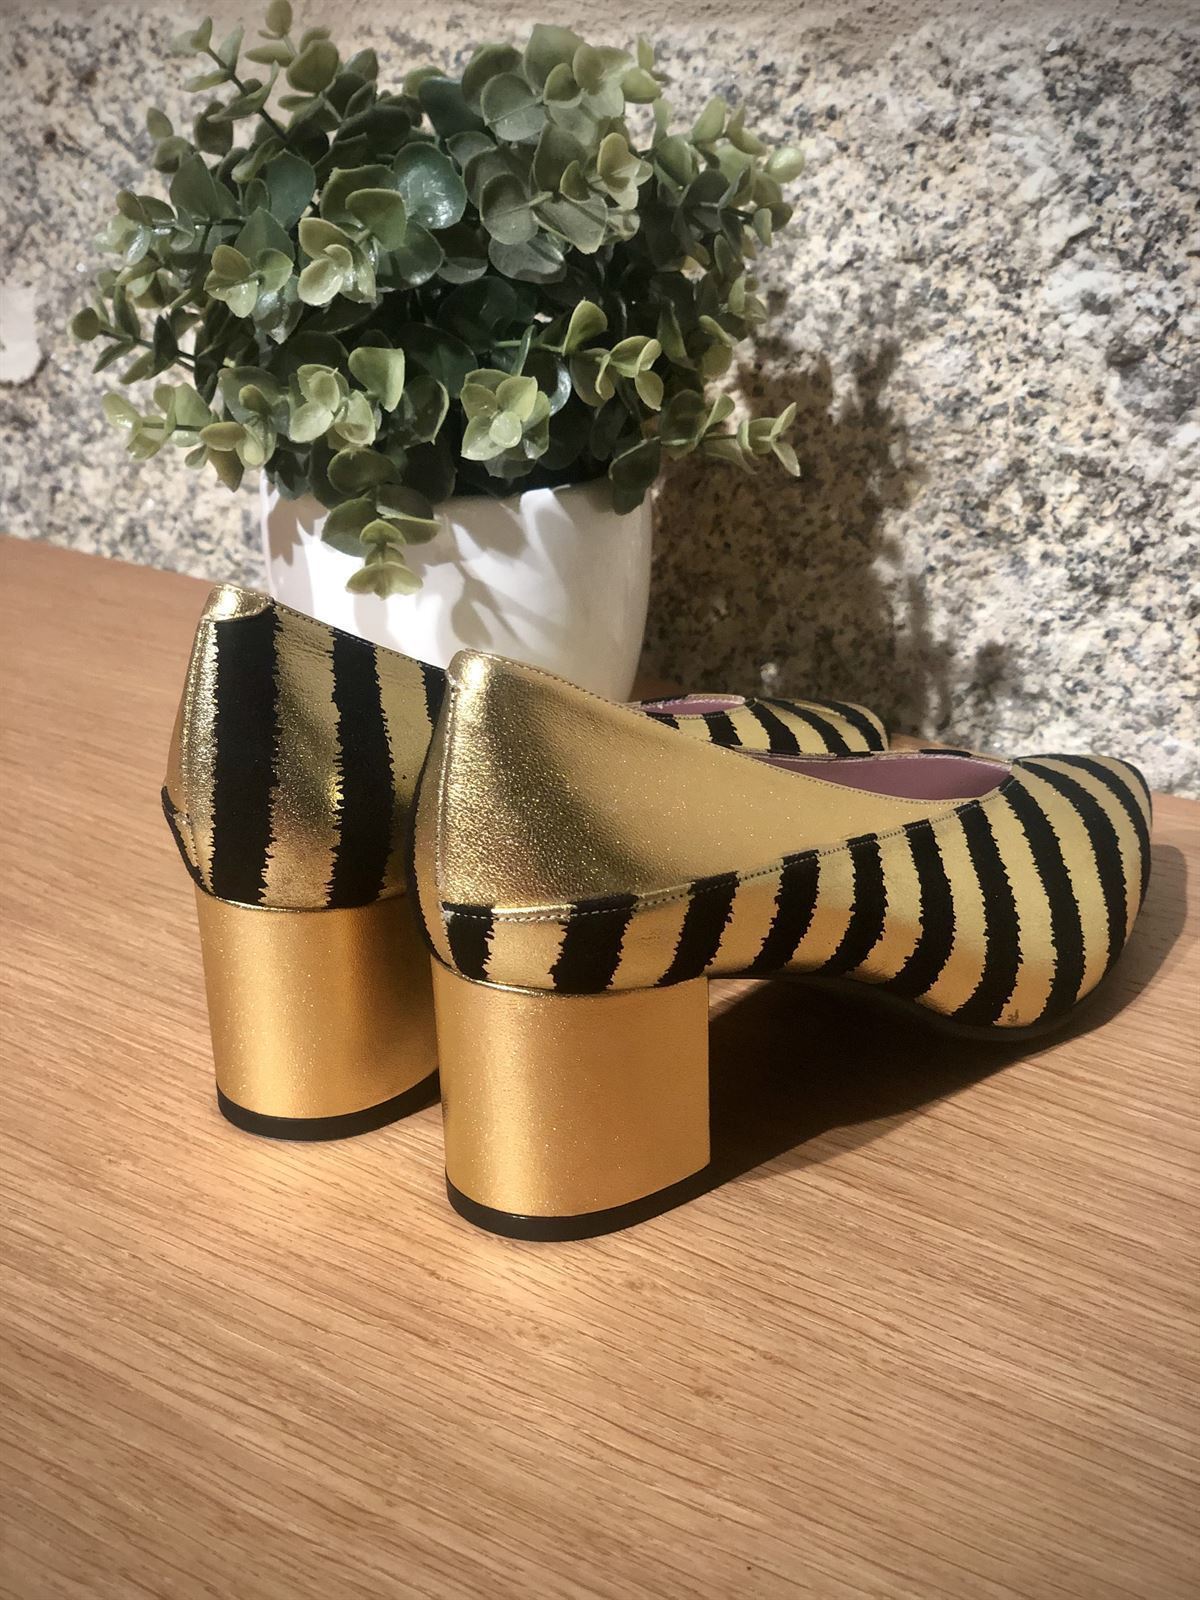 Zapato Angari rayas negro y oro - Imagen 1